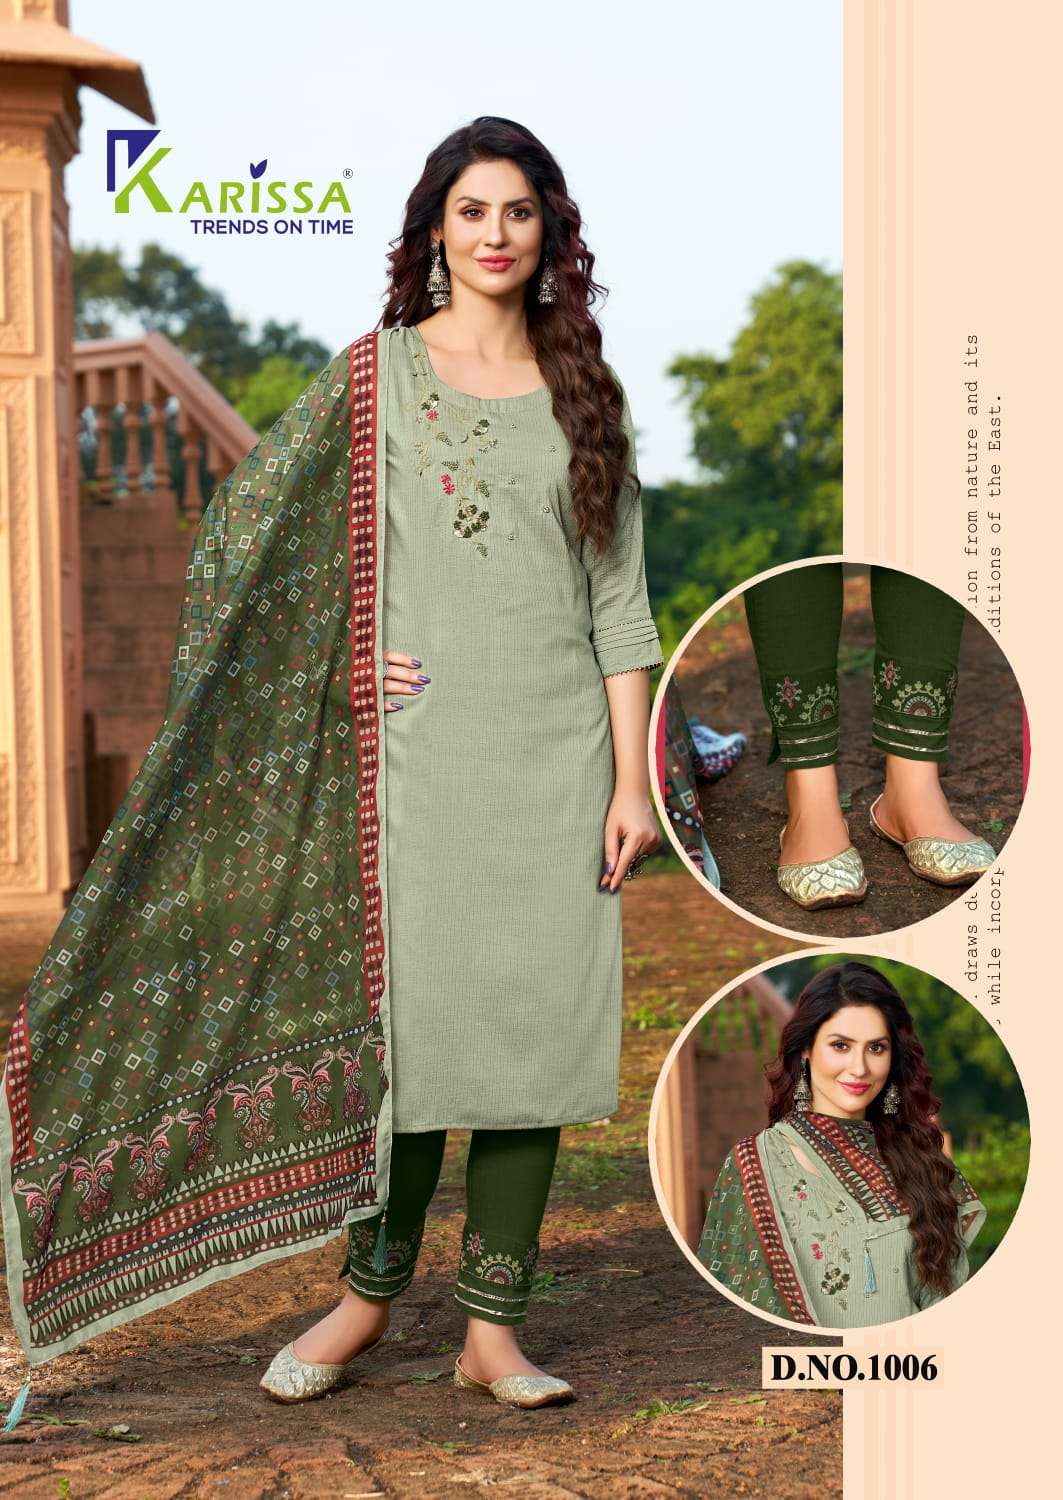 karissa trends albelee 1001-1006 series exclusive designer kurti catalogue collection 2021